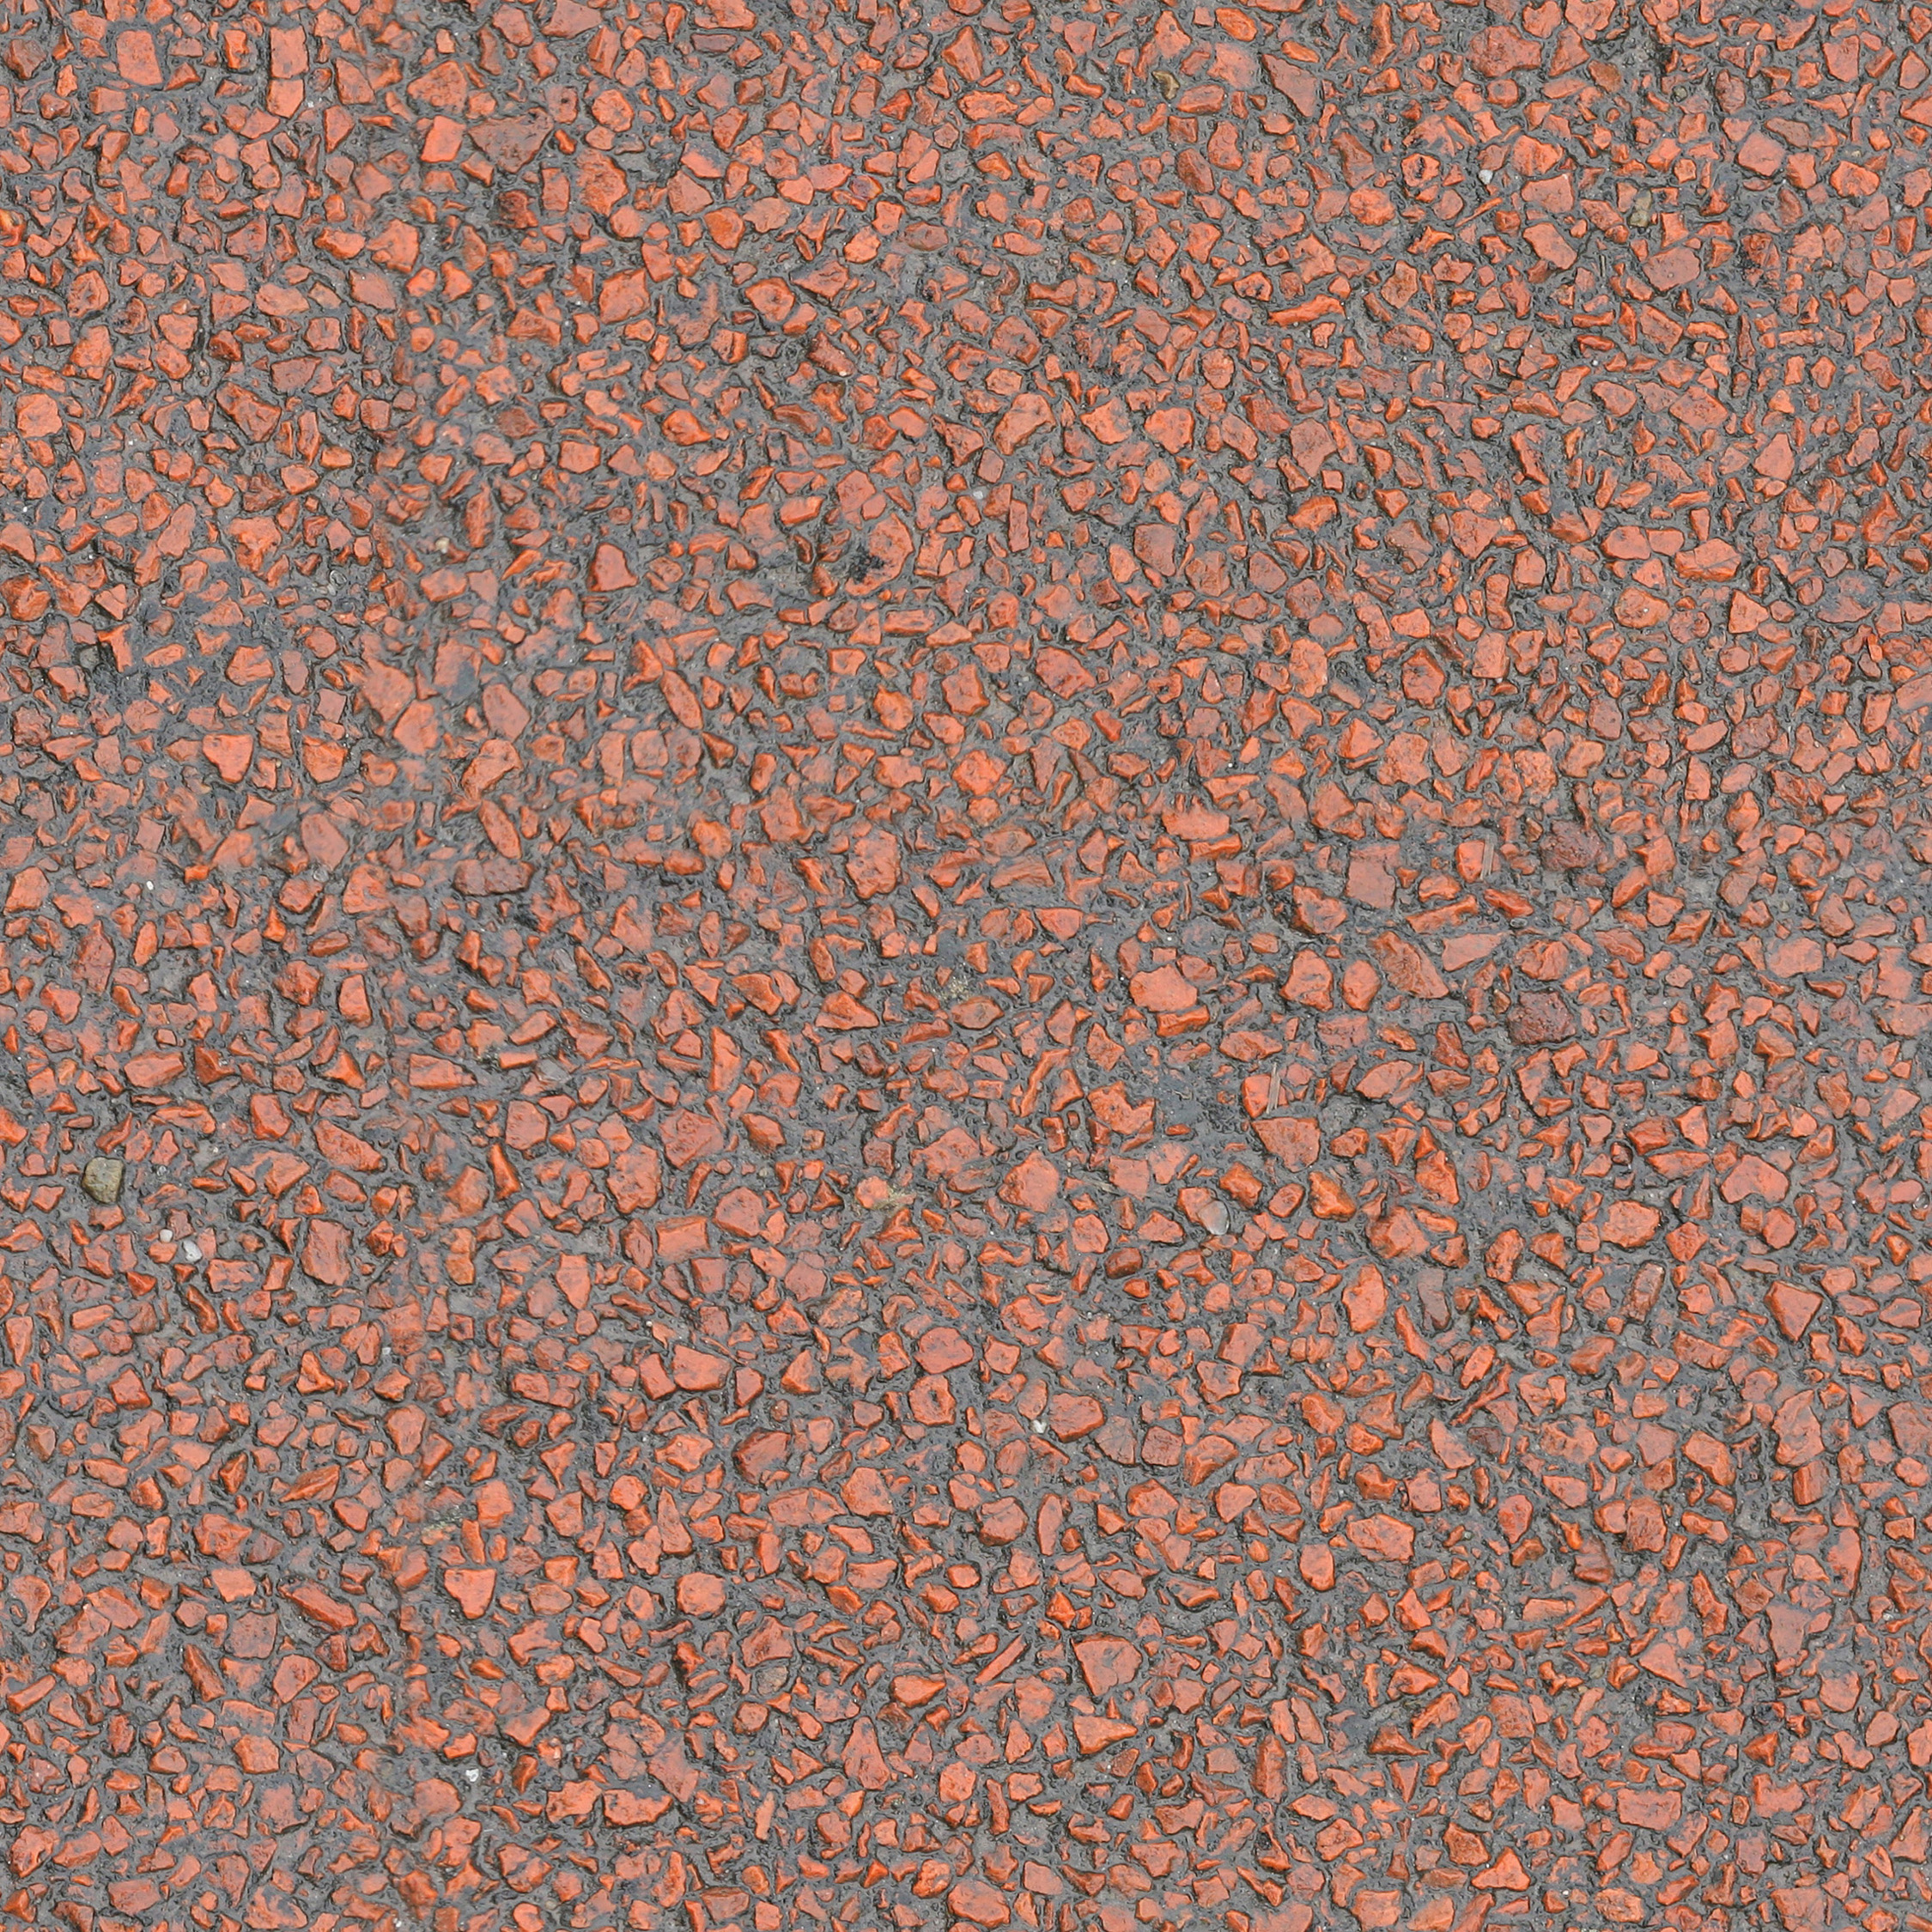 Red asphalt texture background